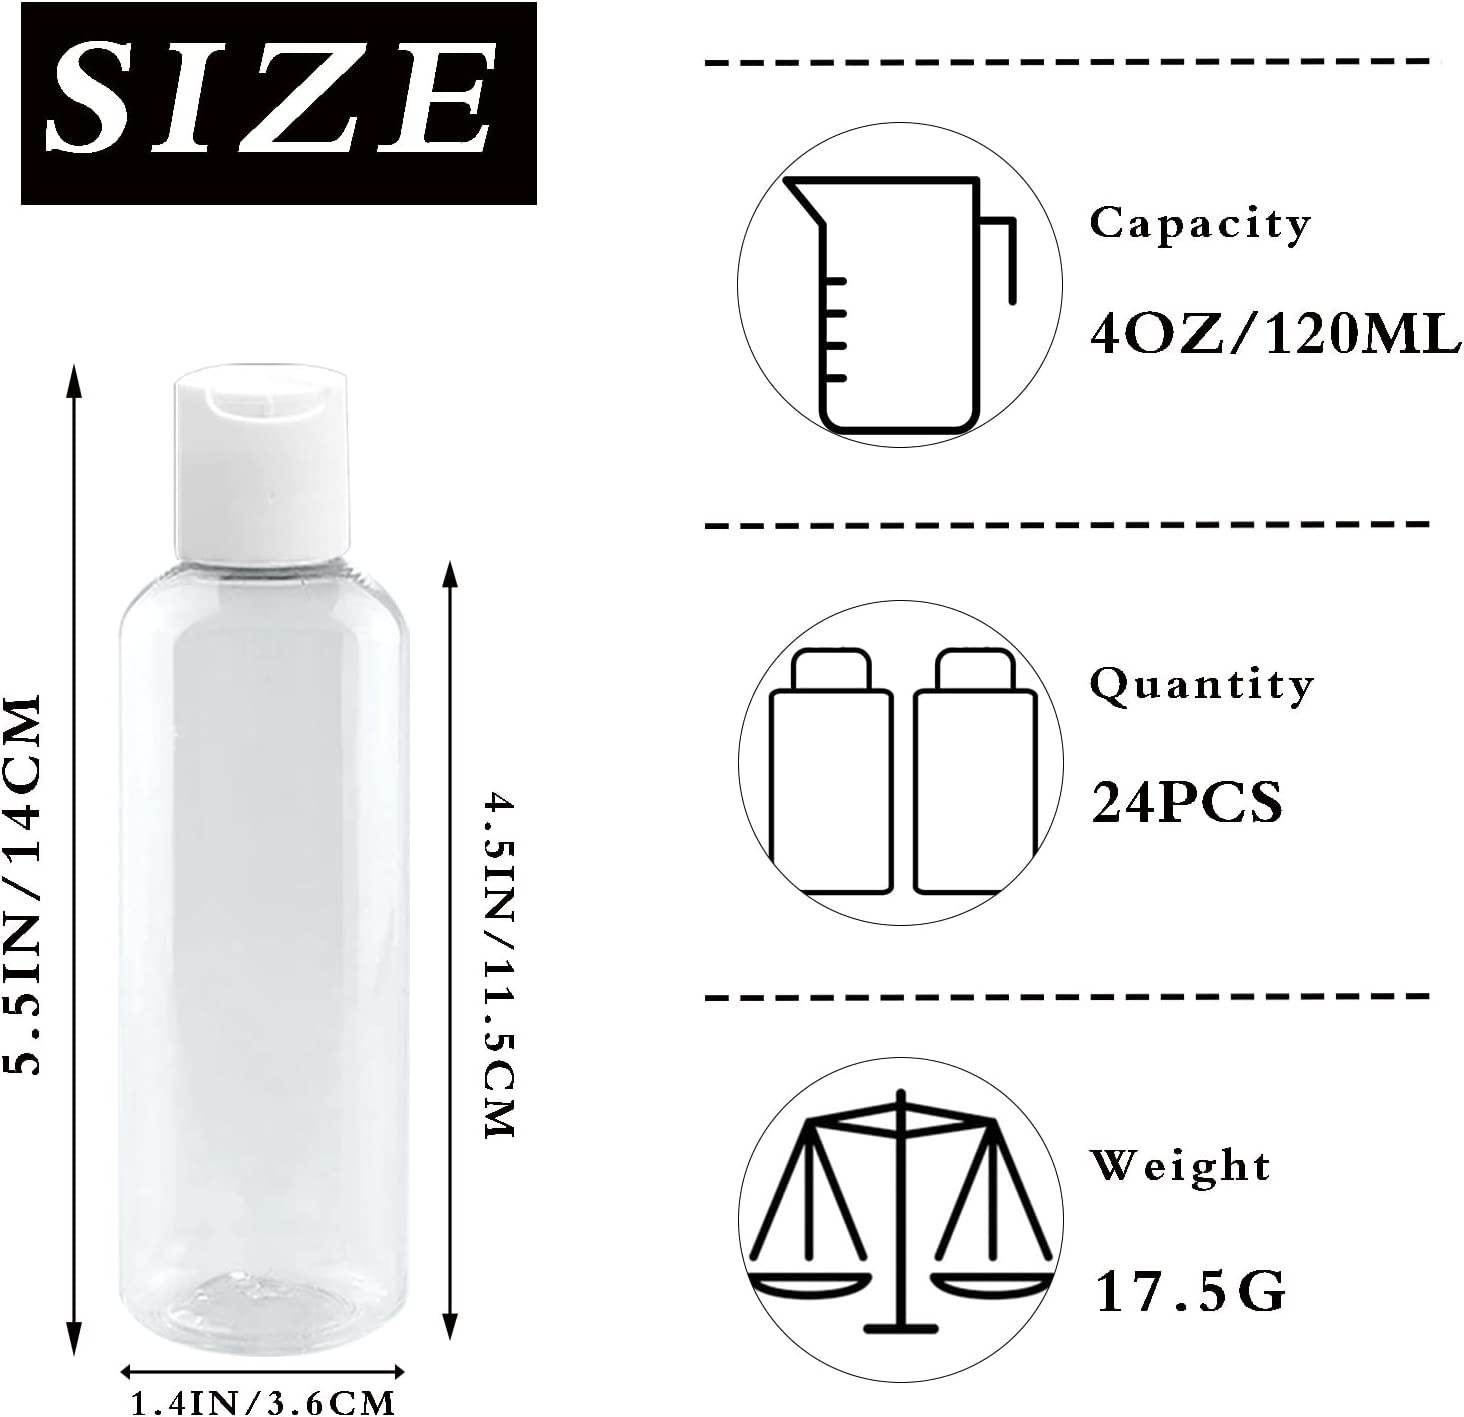 Small Mini Plastic Squeeze Bottles PET White Disc Top 4 Oz. 